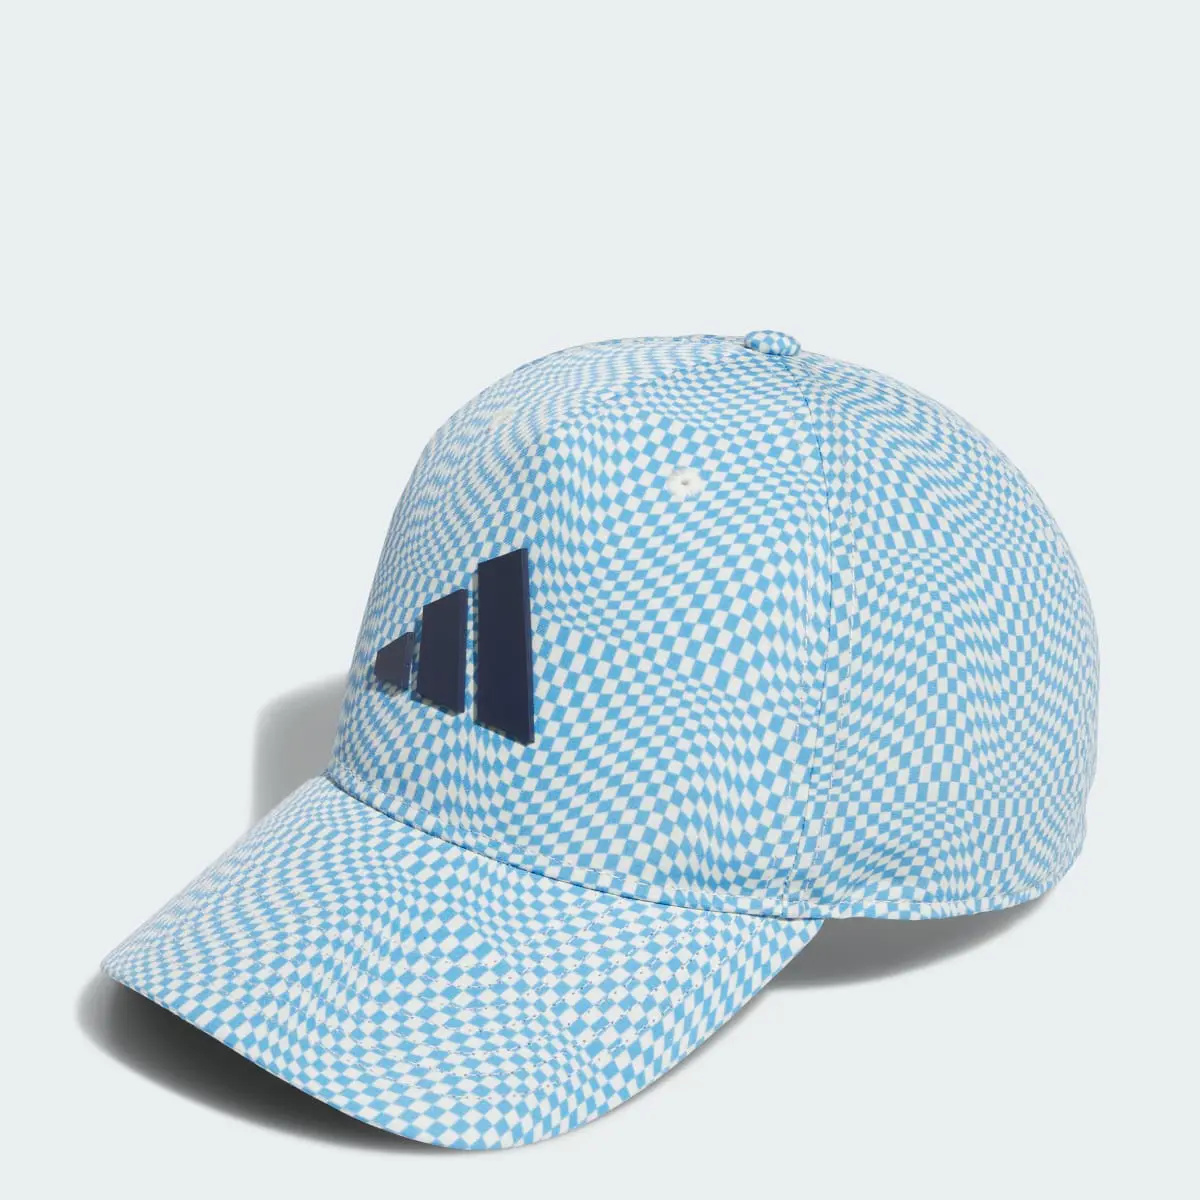 Adidas Tour Printed Snapback Hat. 1